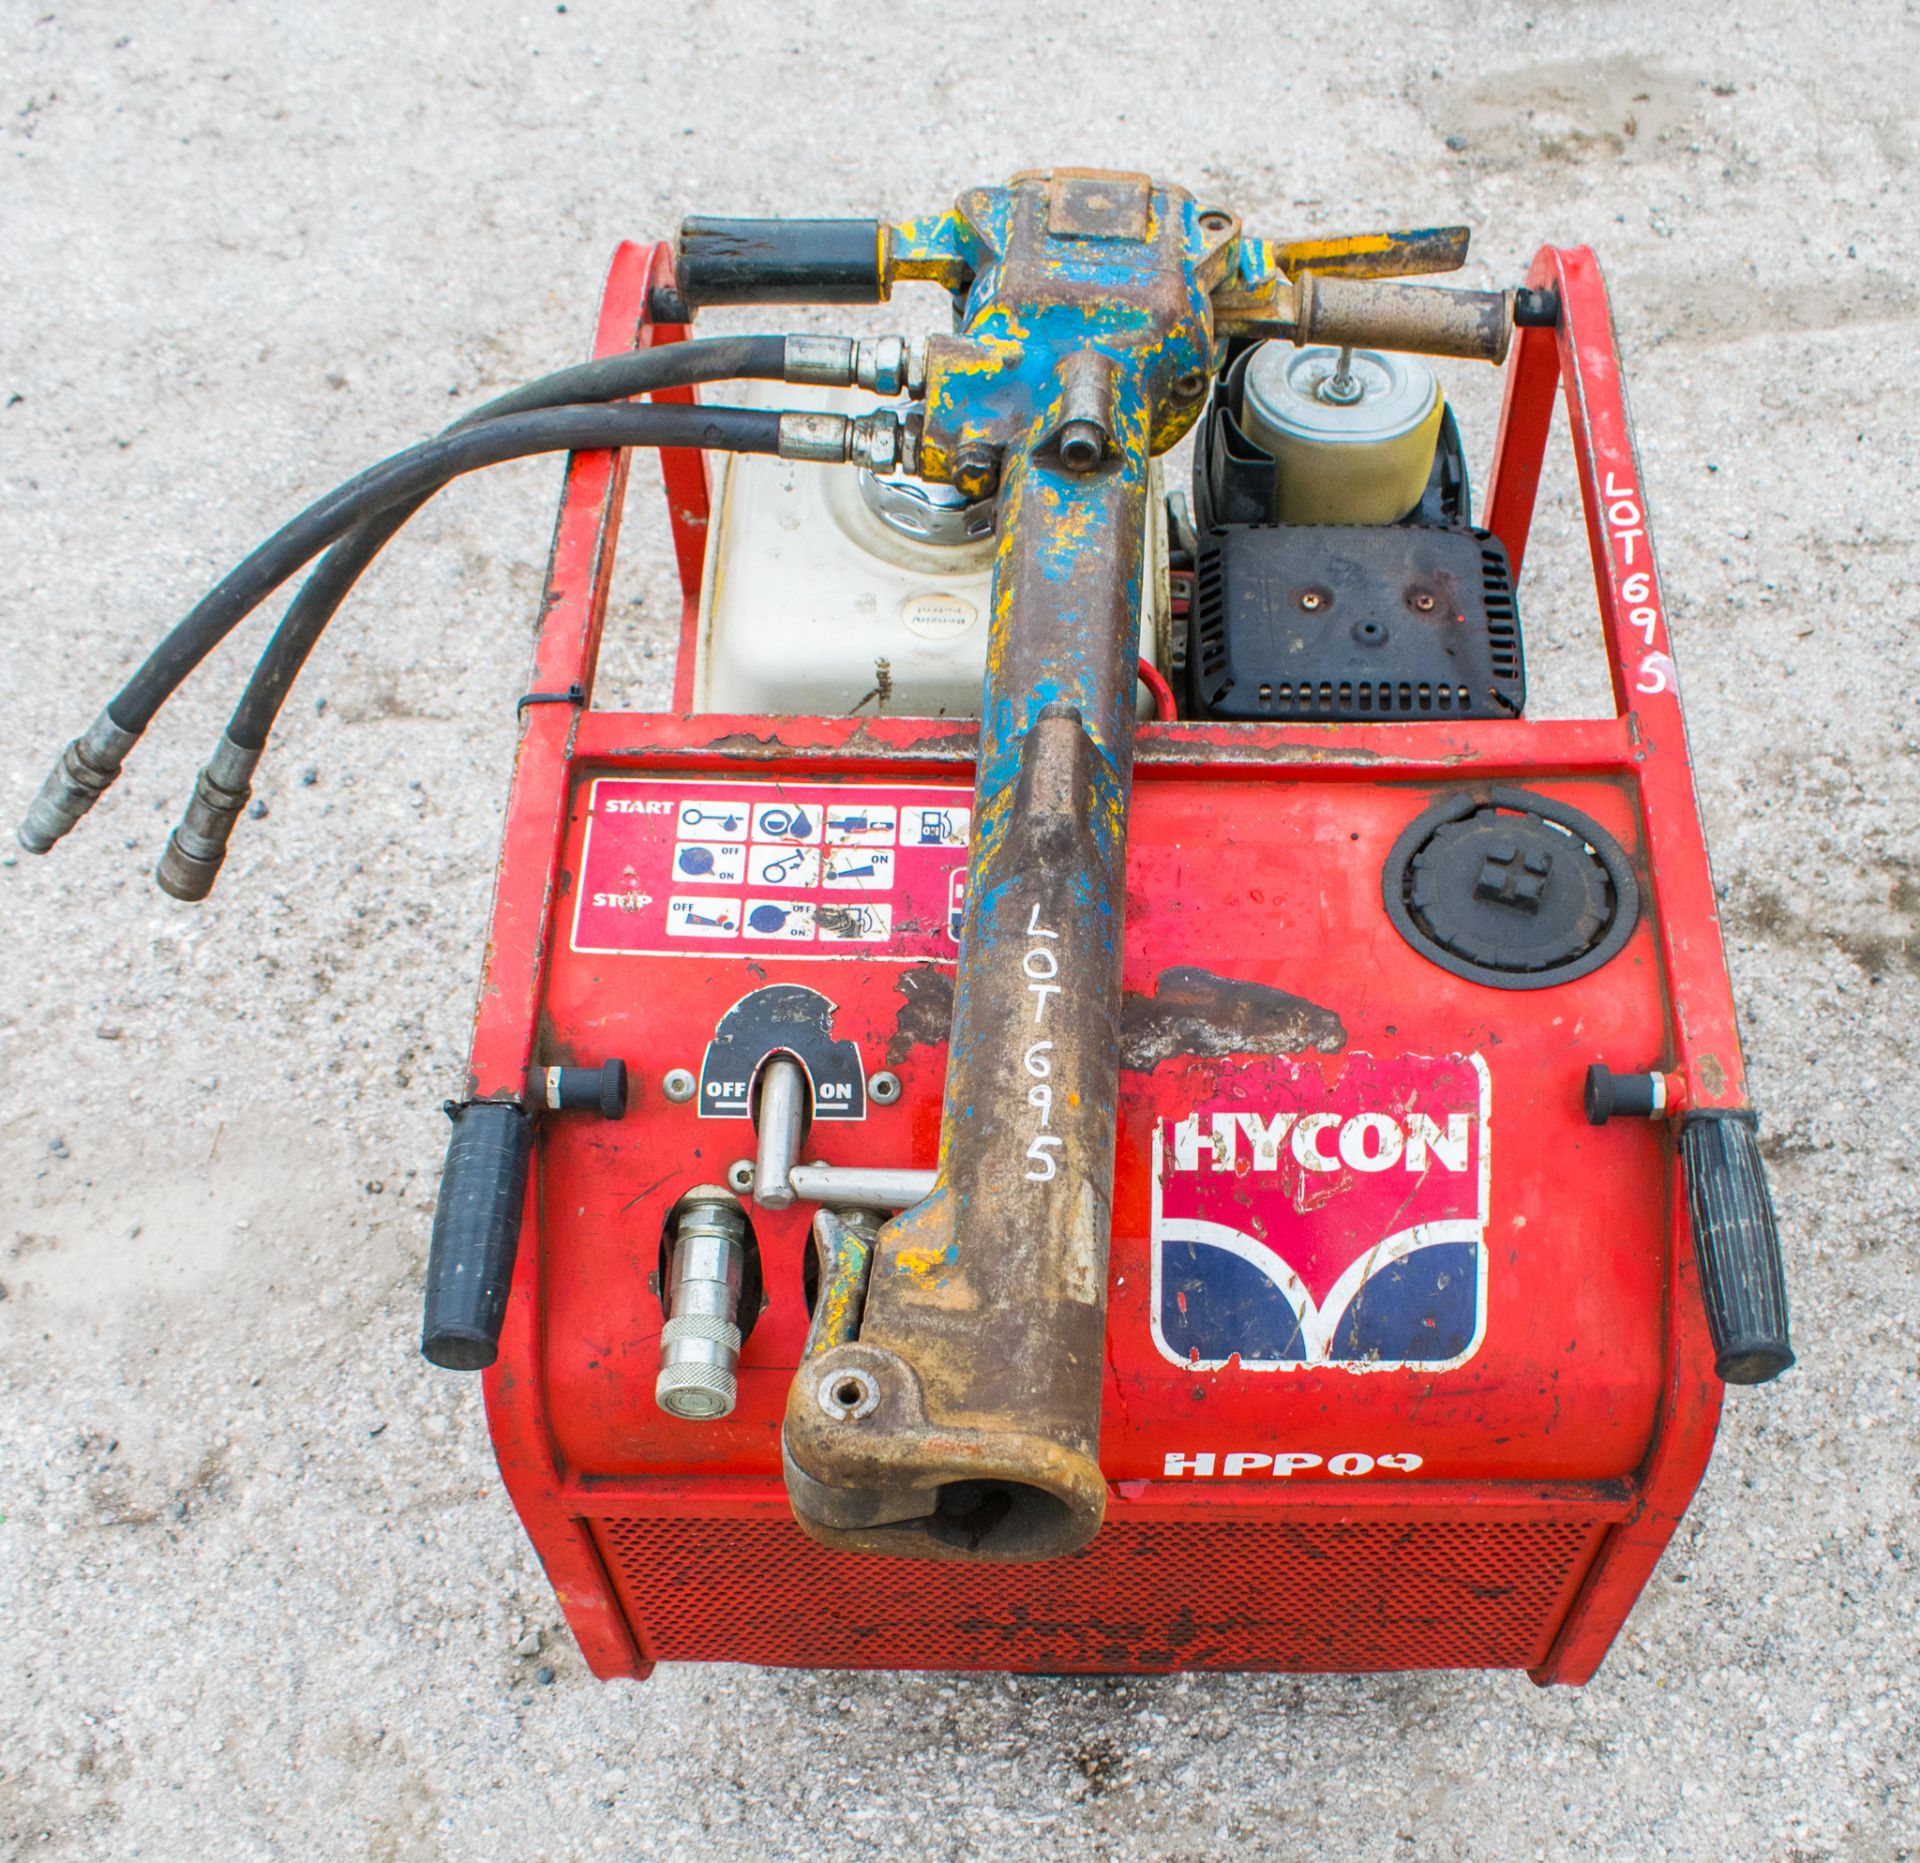 Hycon HPP09 petrol driven hydraulic power pack c/w JCB anti vibe breaker - Image 2 of 3